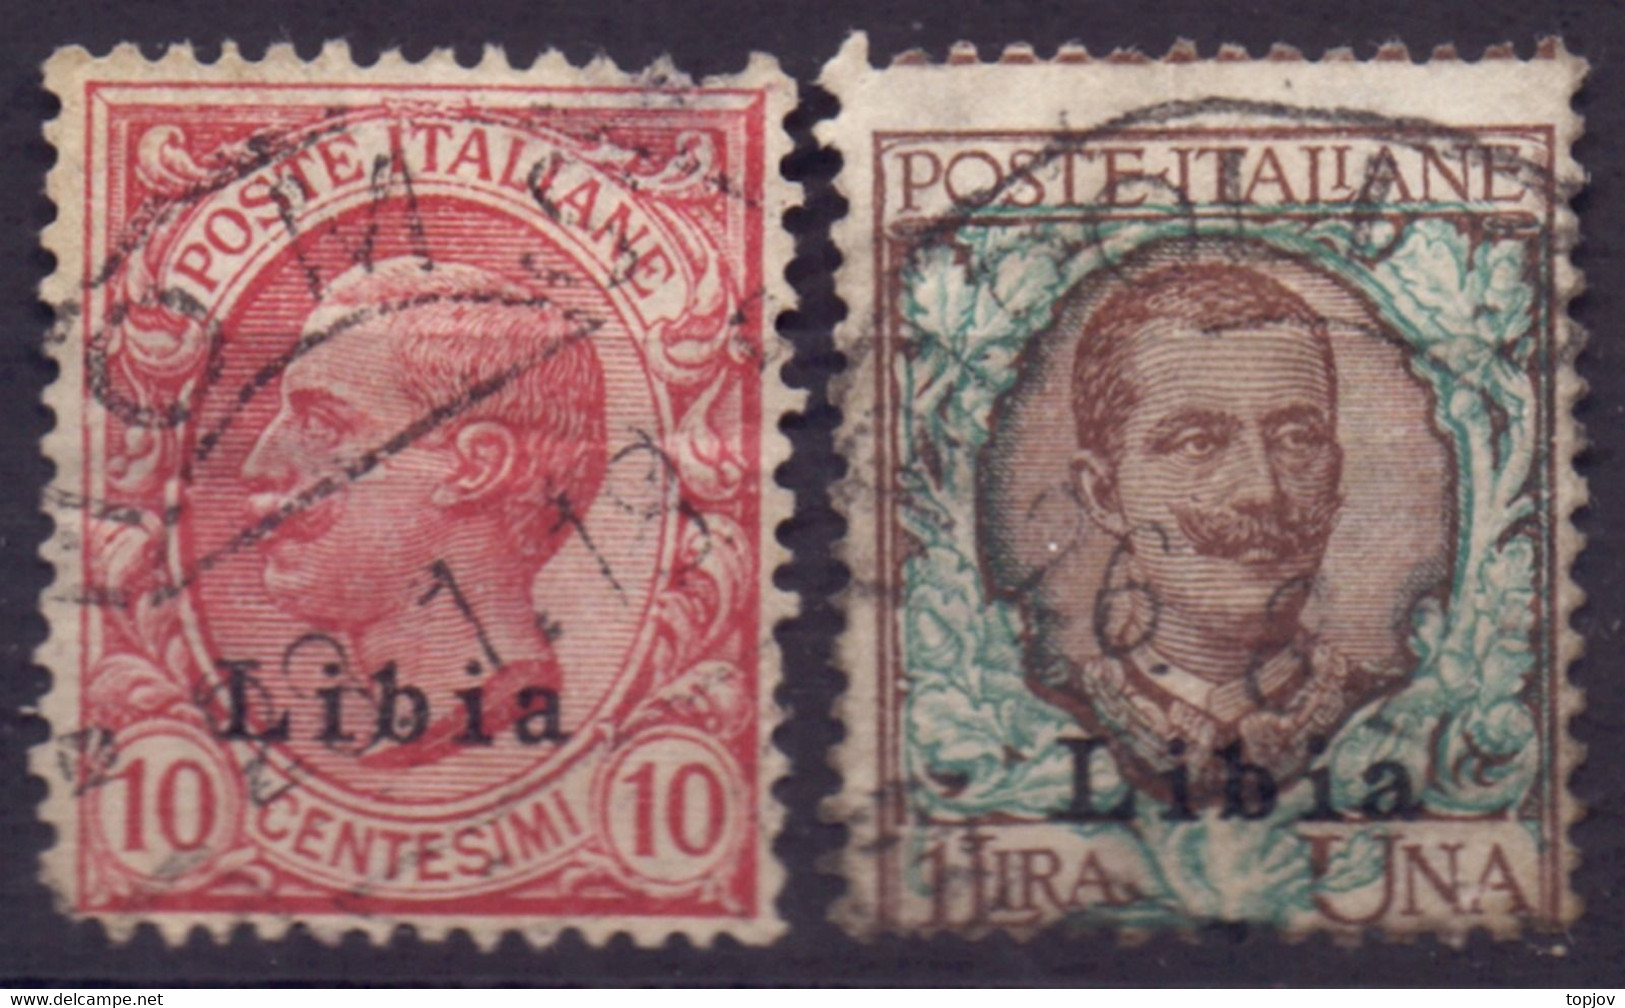 ITALIA - LIBYA - VITT. EM. III- O - 1912 - Libië